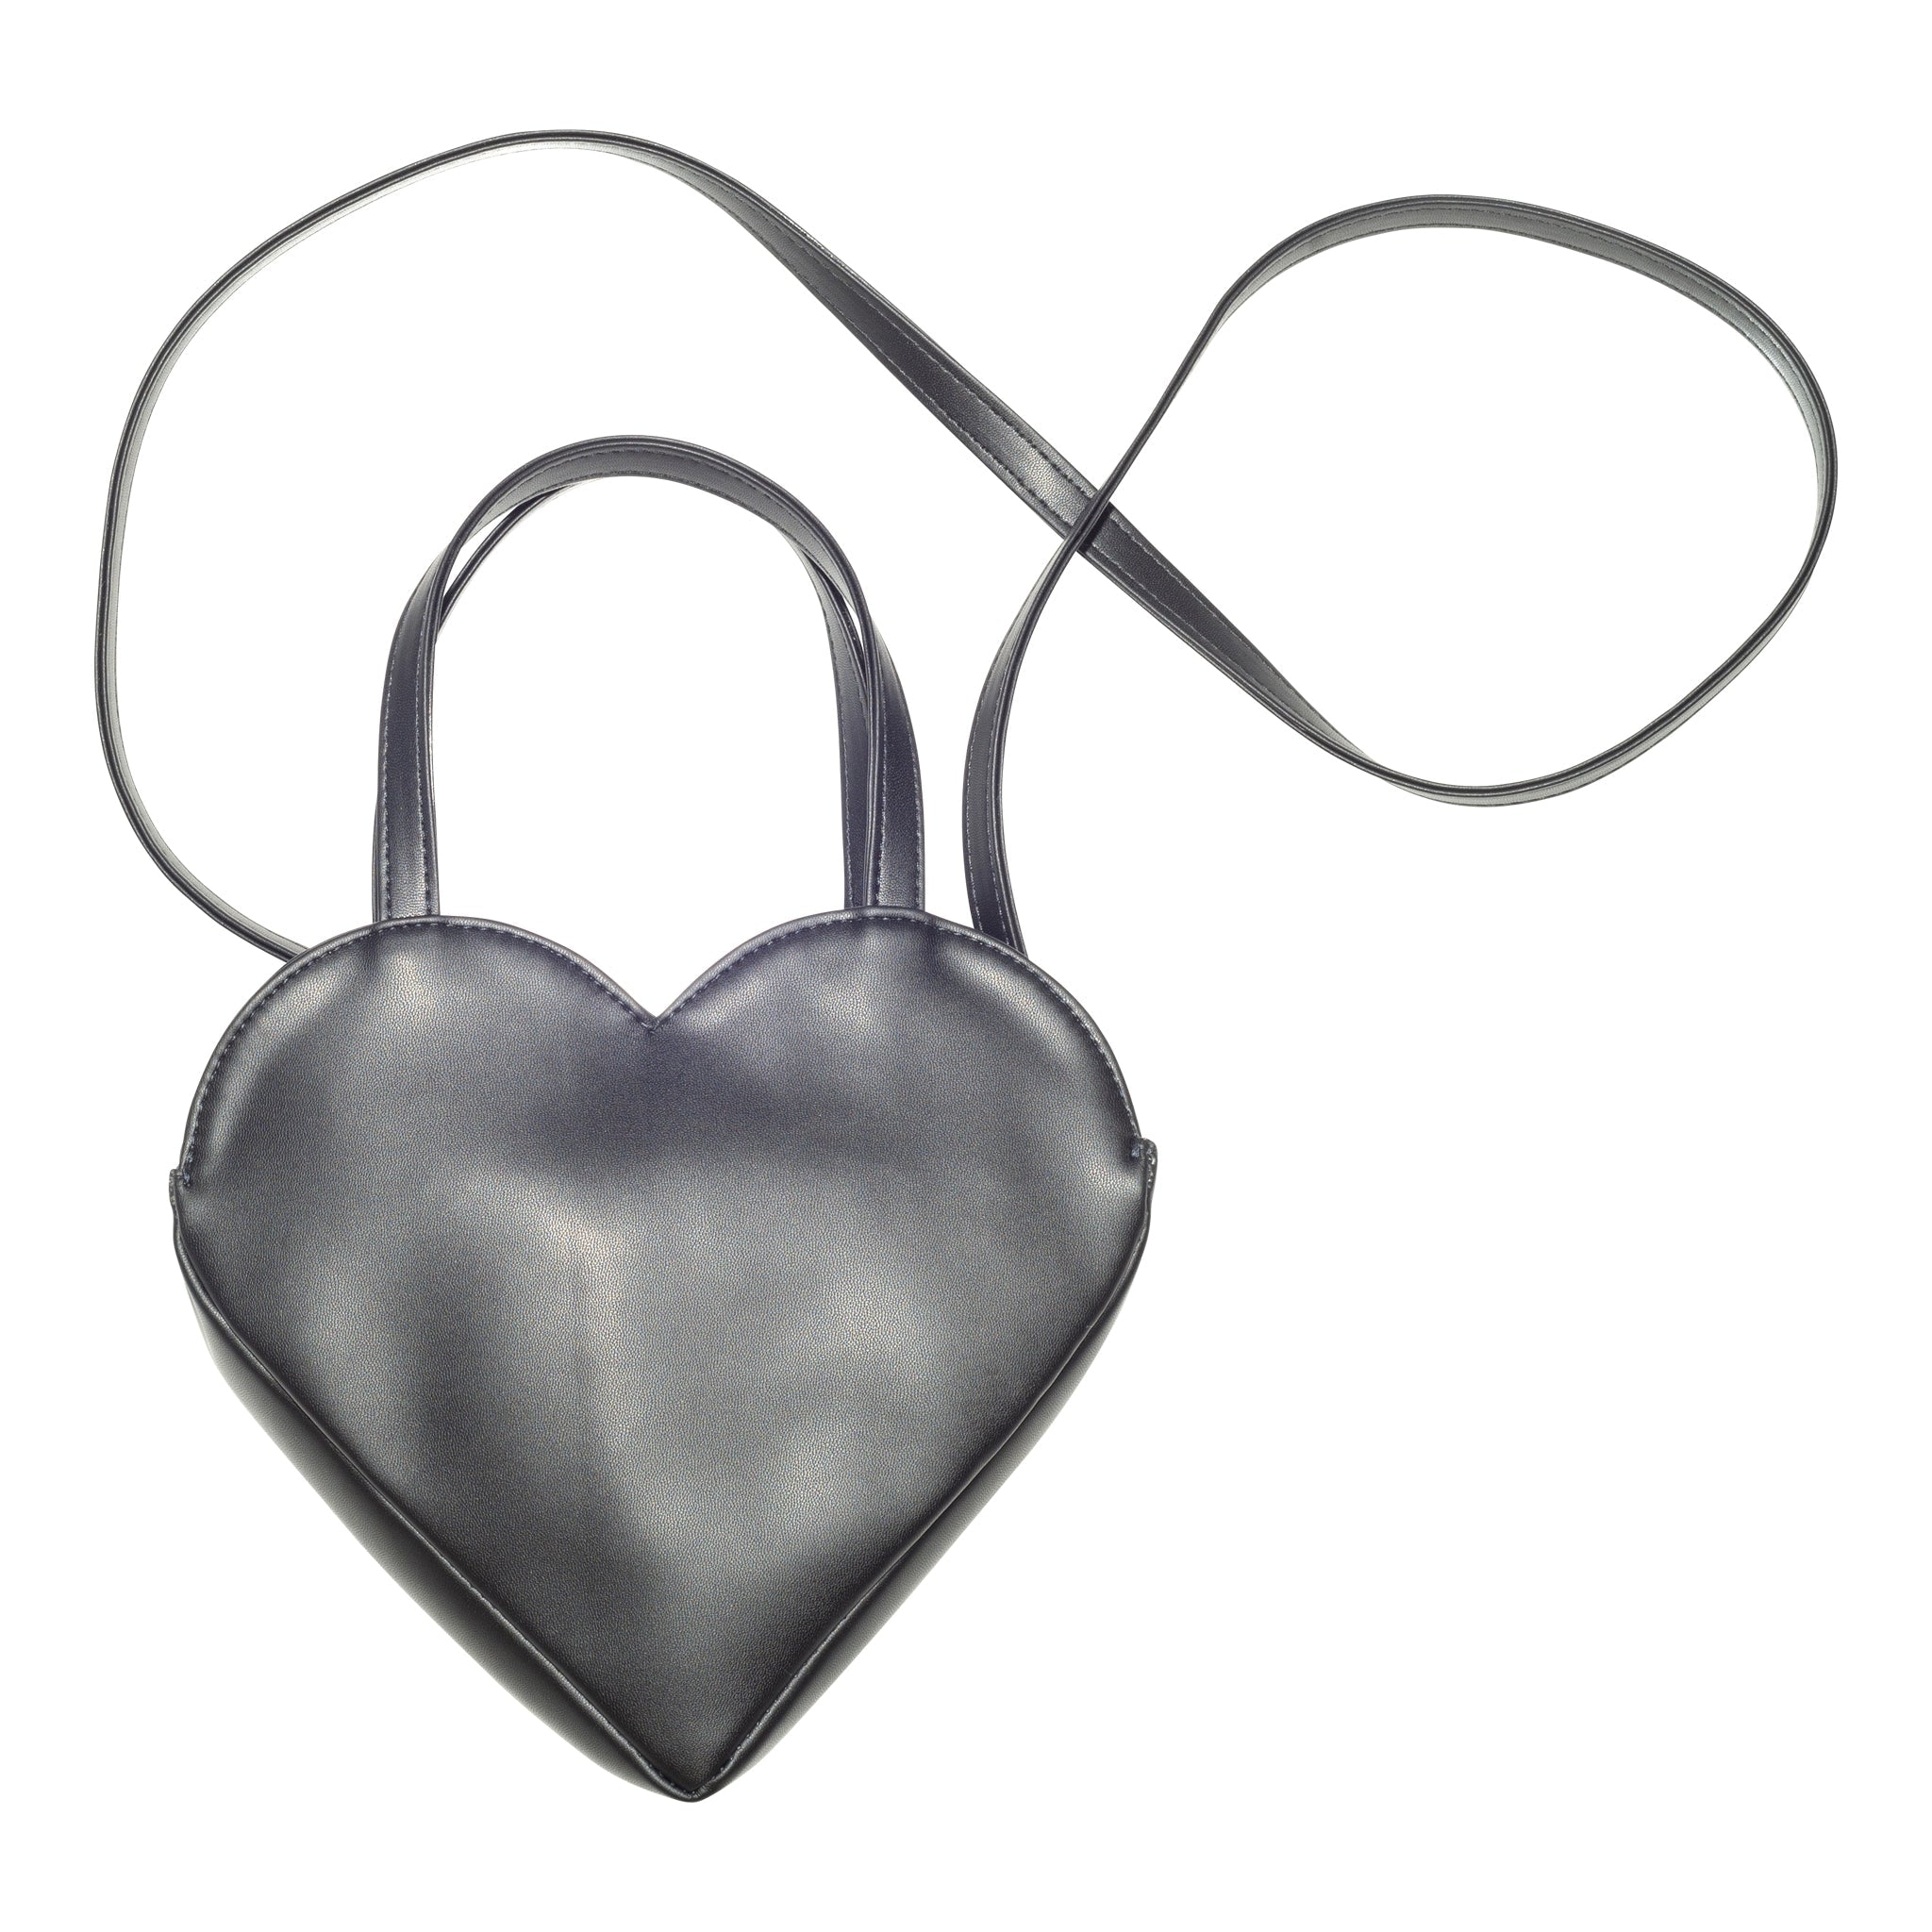 HOZEN Heart Bag Black Heart Shaped Purse with Crossbody Strap